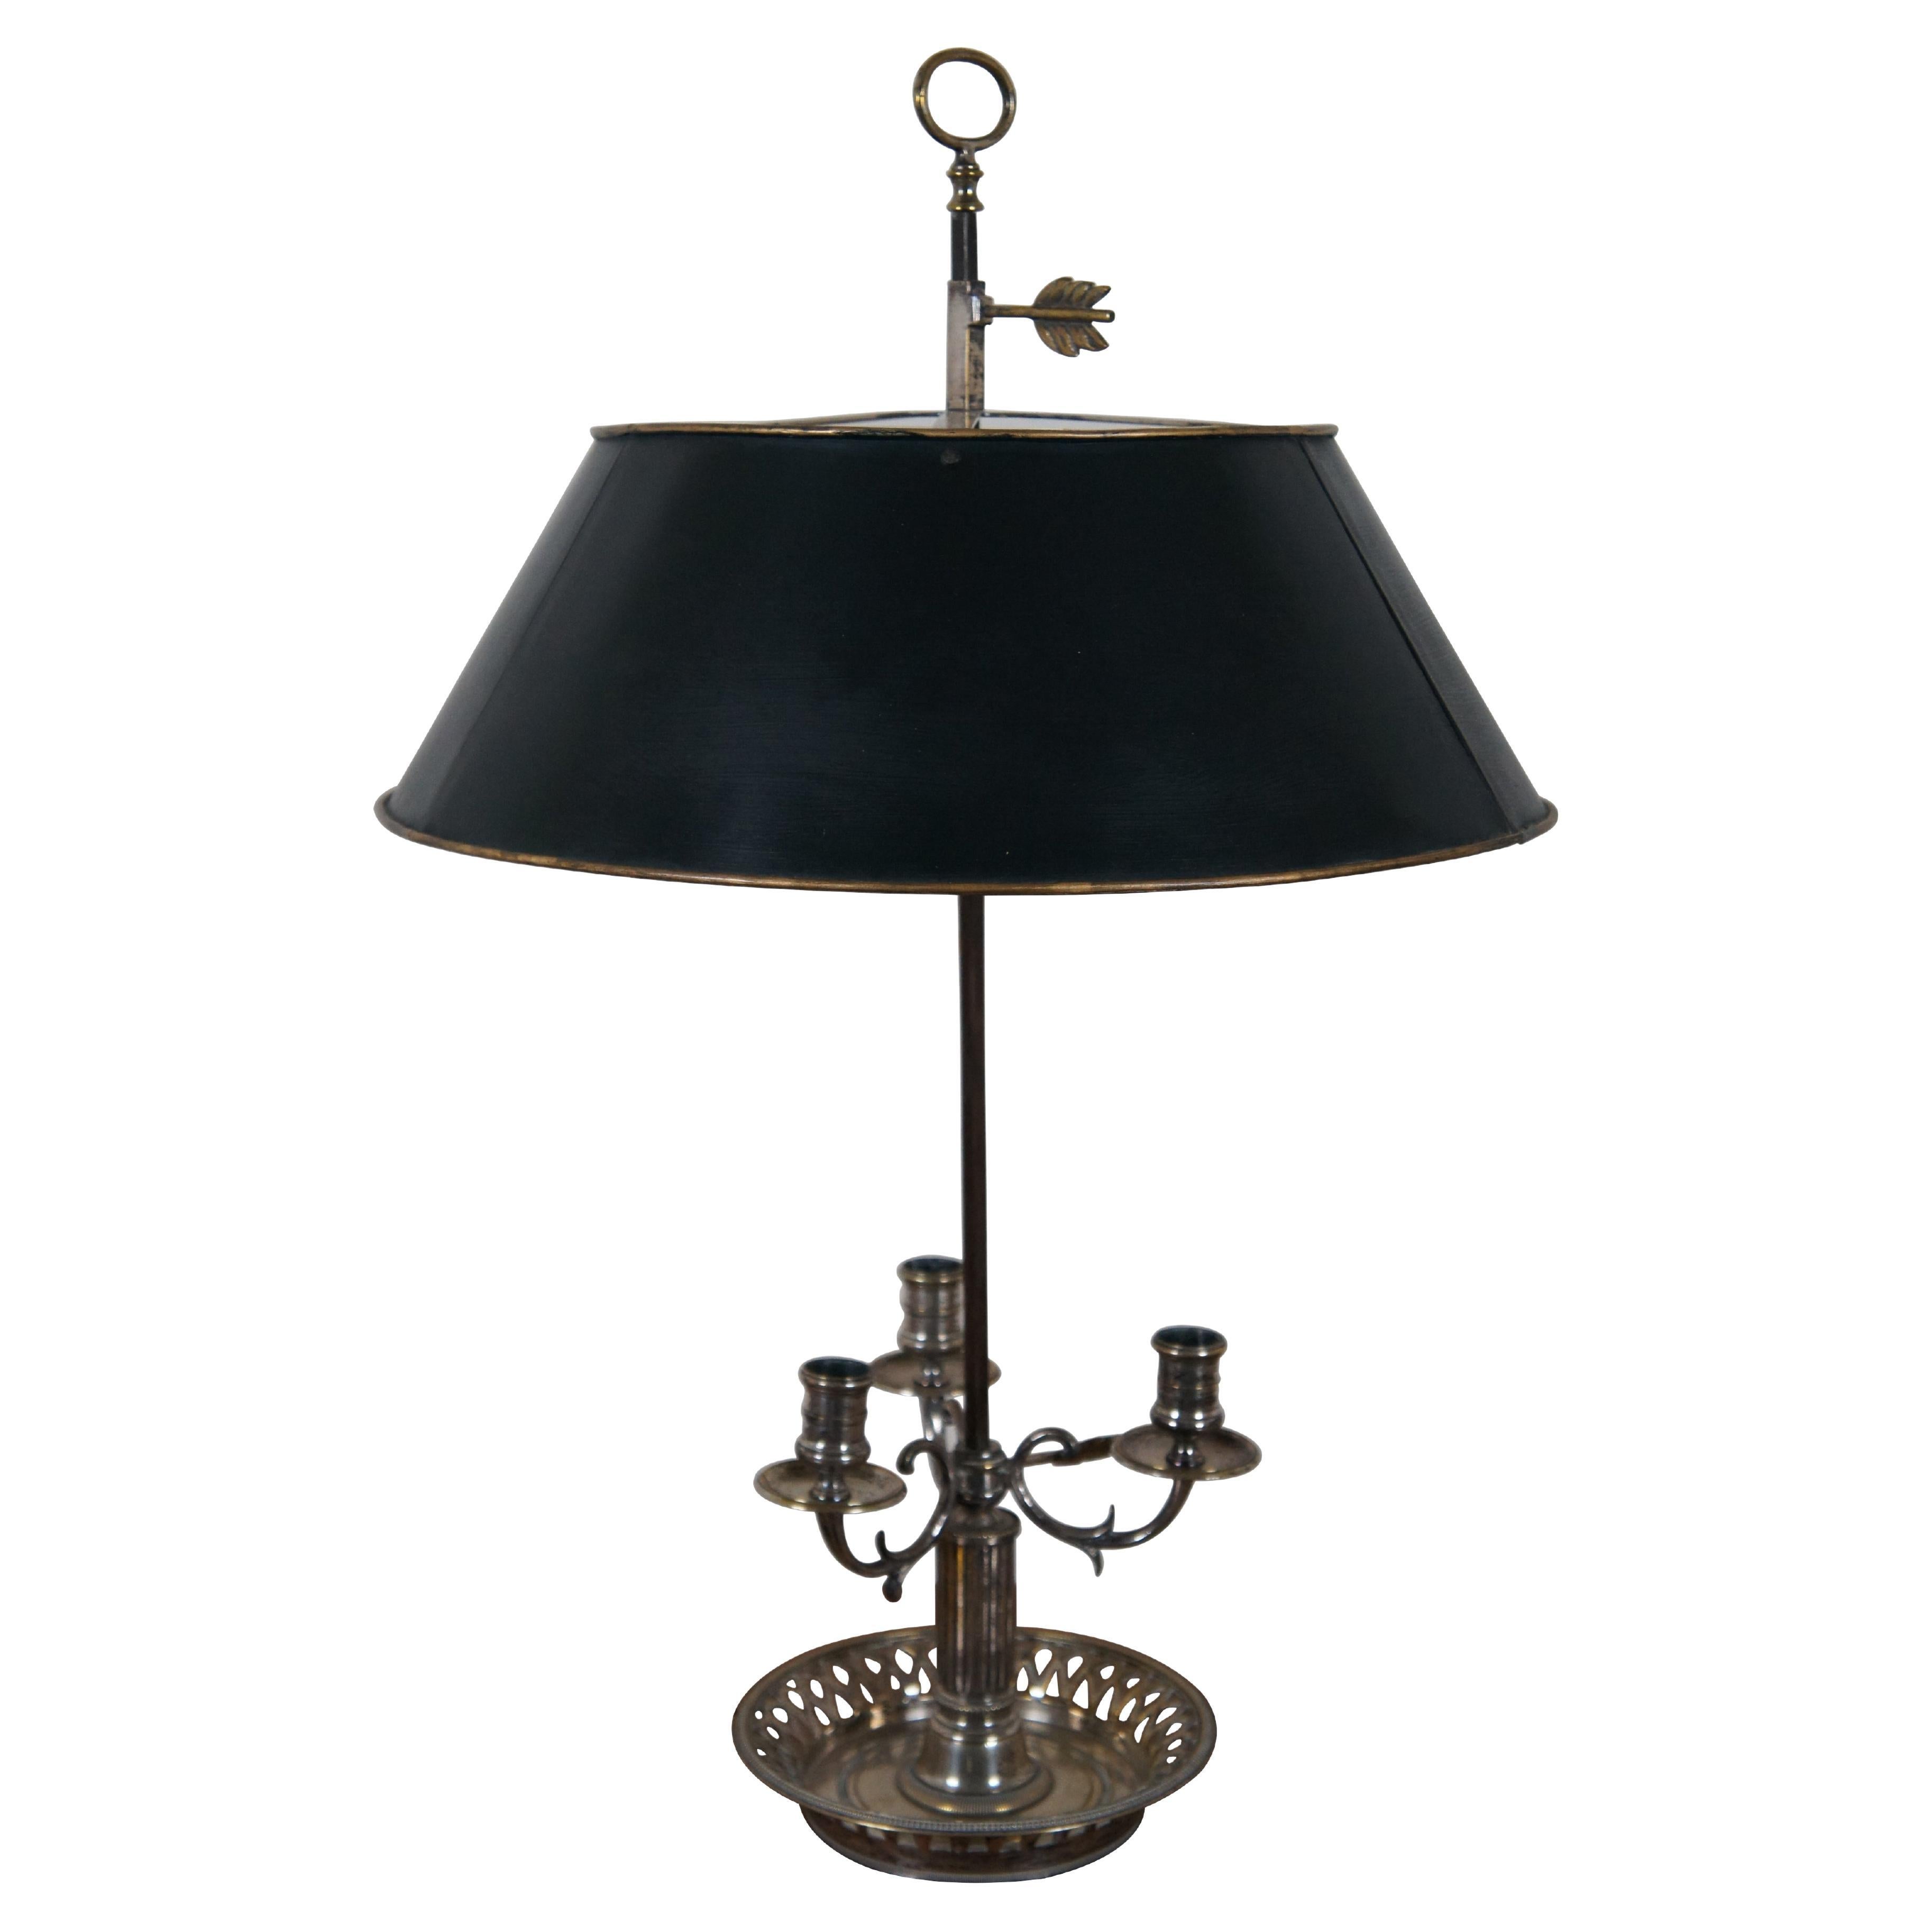 Antique French Bouillotte Directoire 3 Light Pierced Tole Candelabra Lamp For Sale